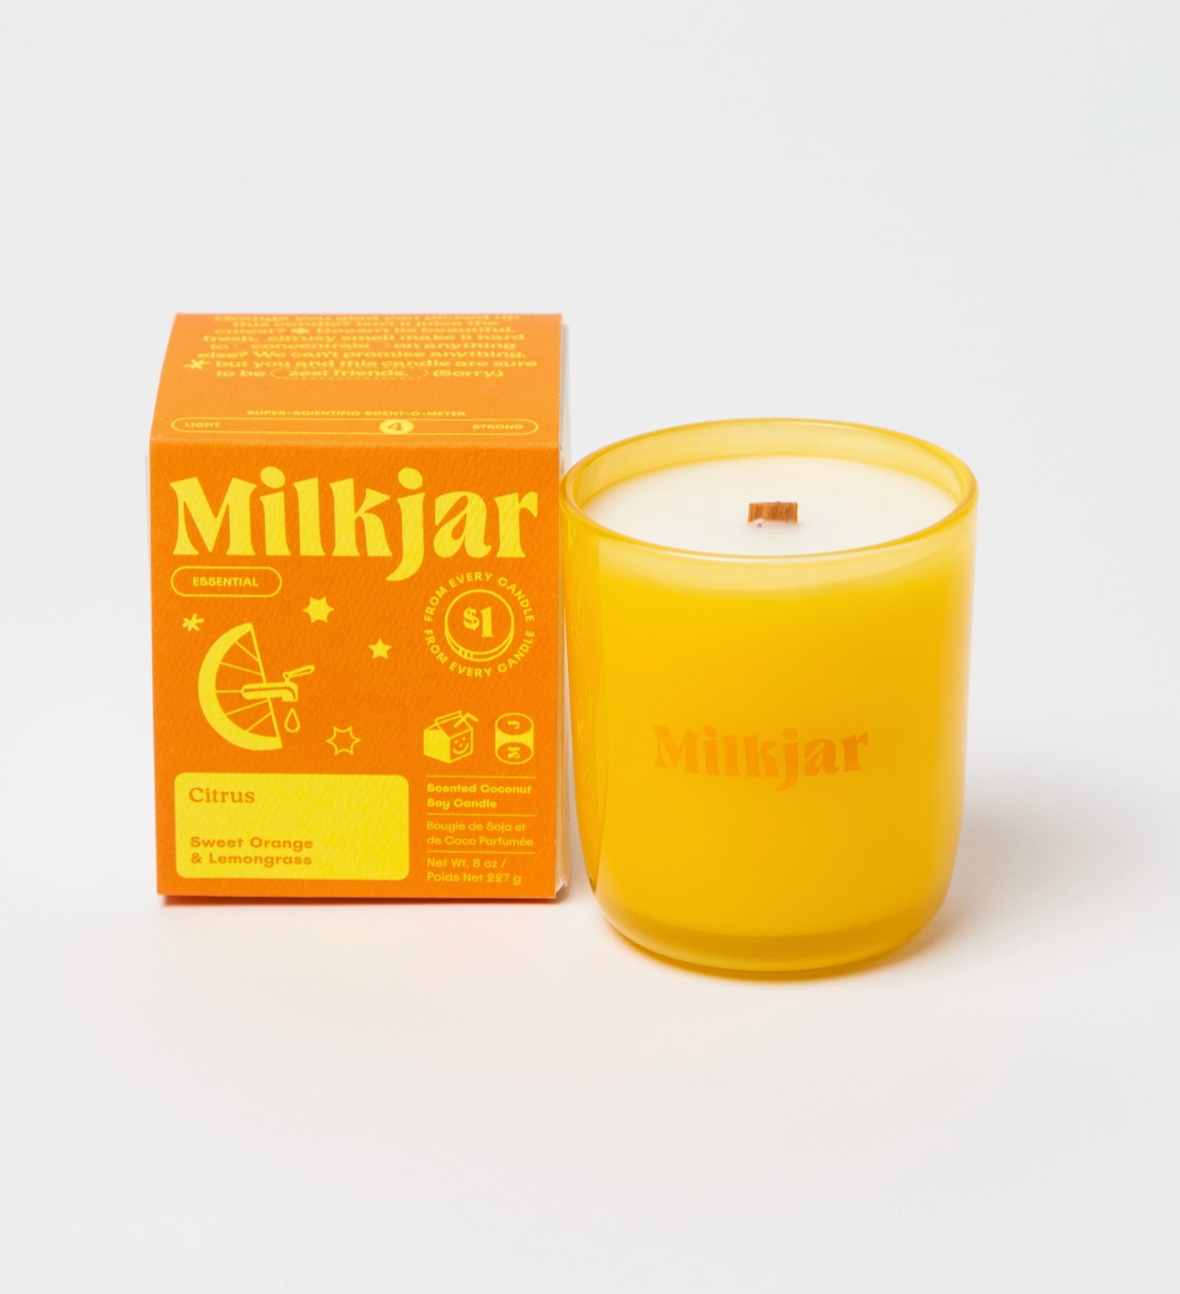 Milk Jar Citrus - Essential Oil Coconut Soy Candle